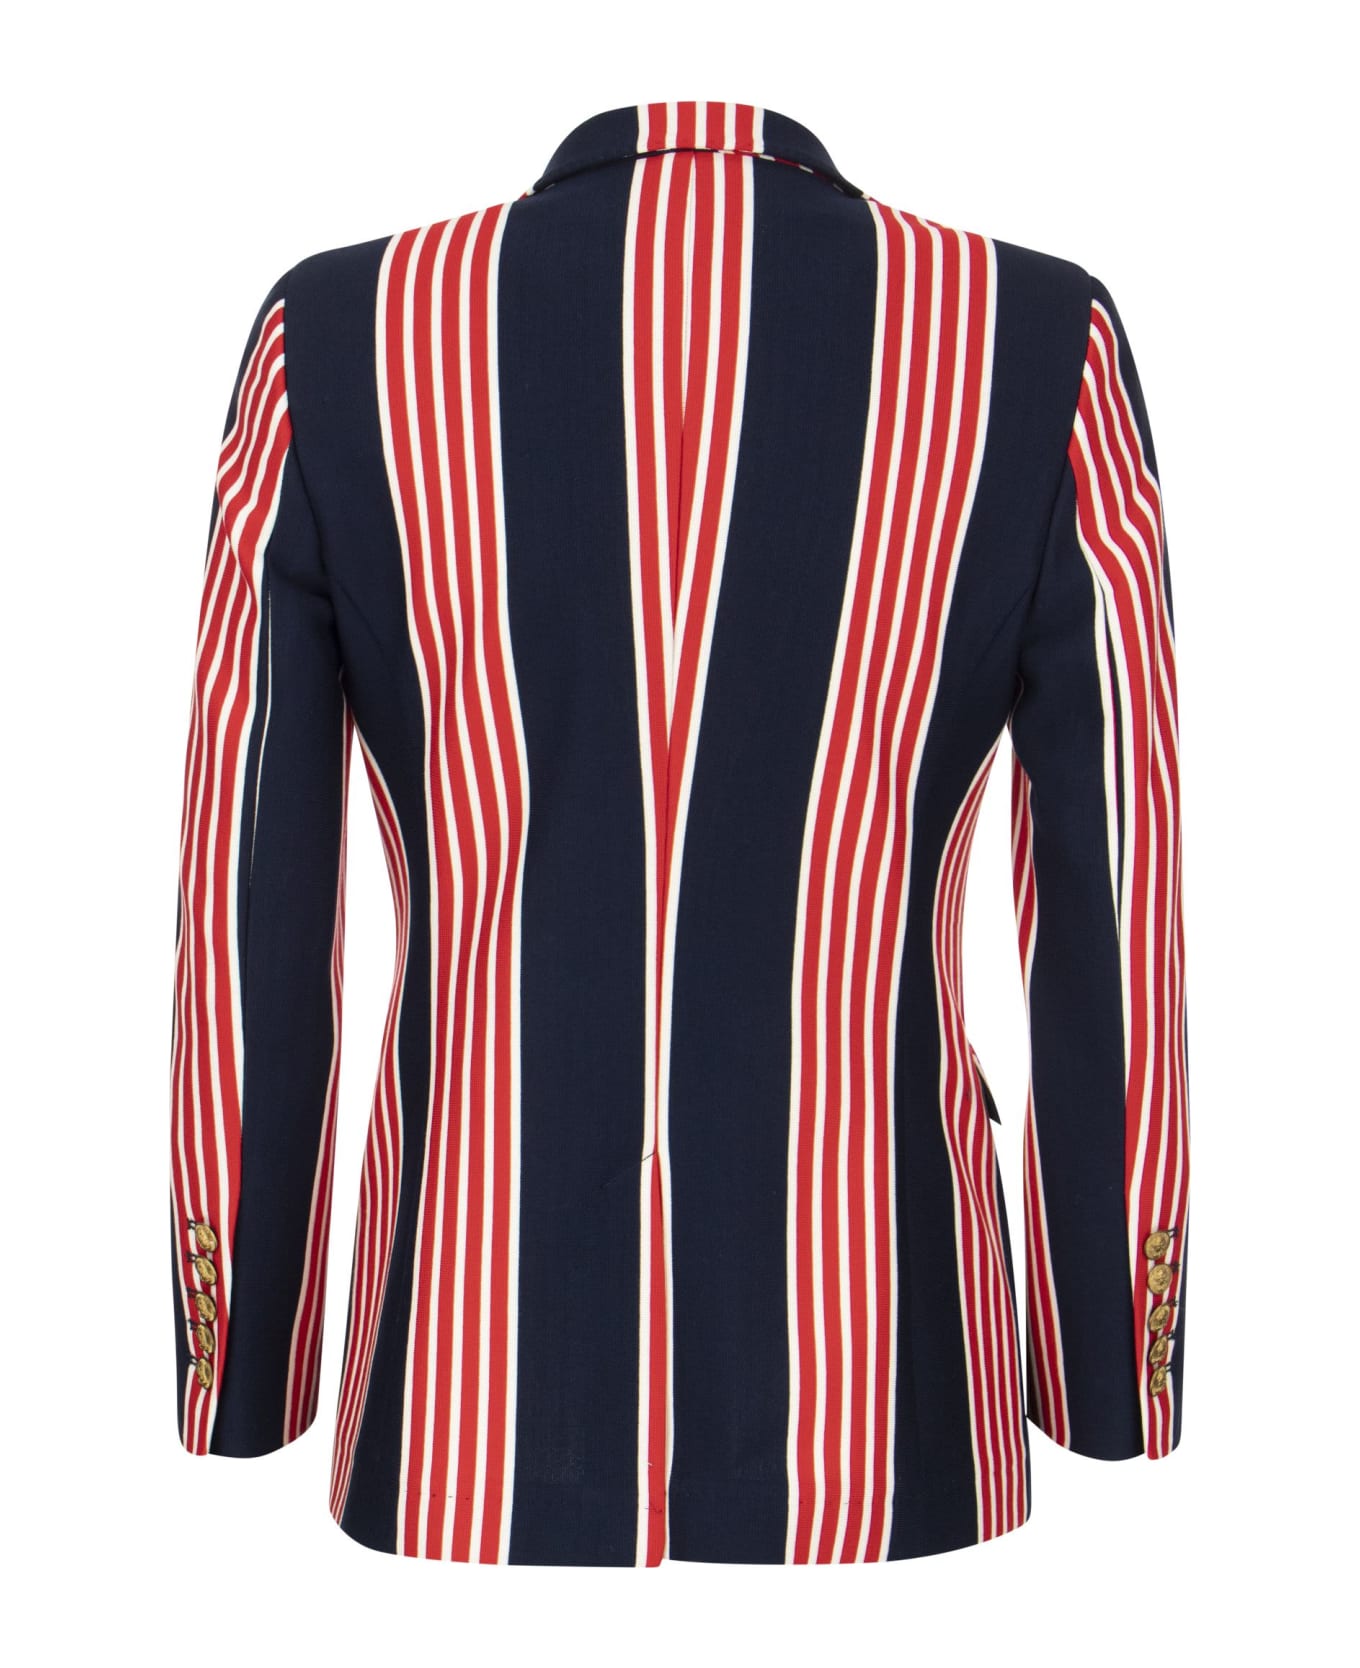 Saulina Milano Angelica - Striped Jacket - Blue/red